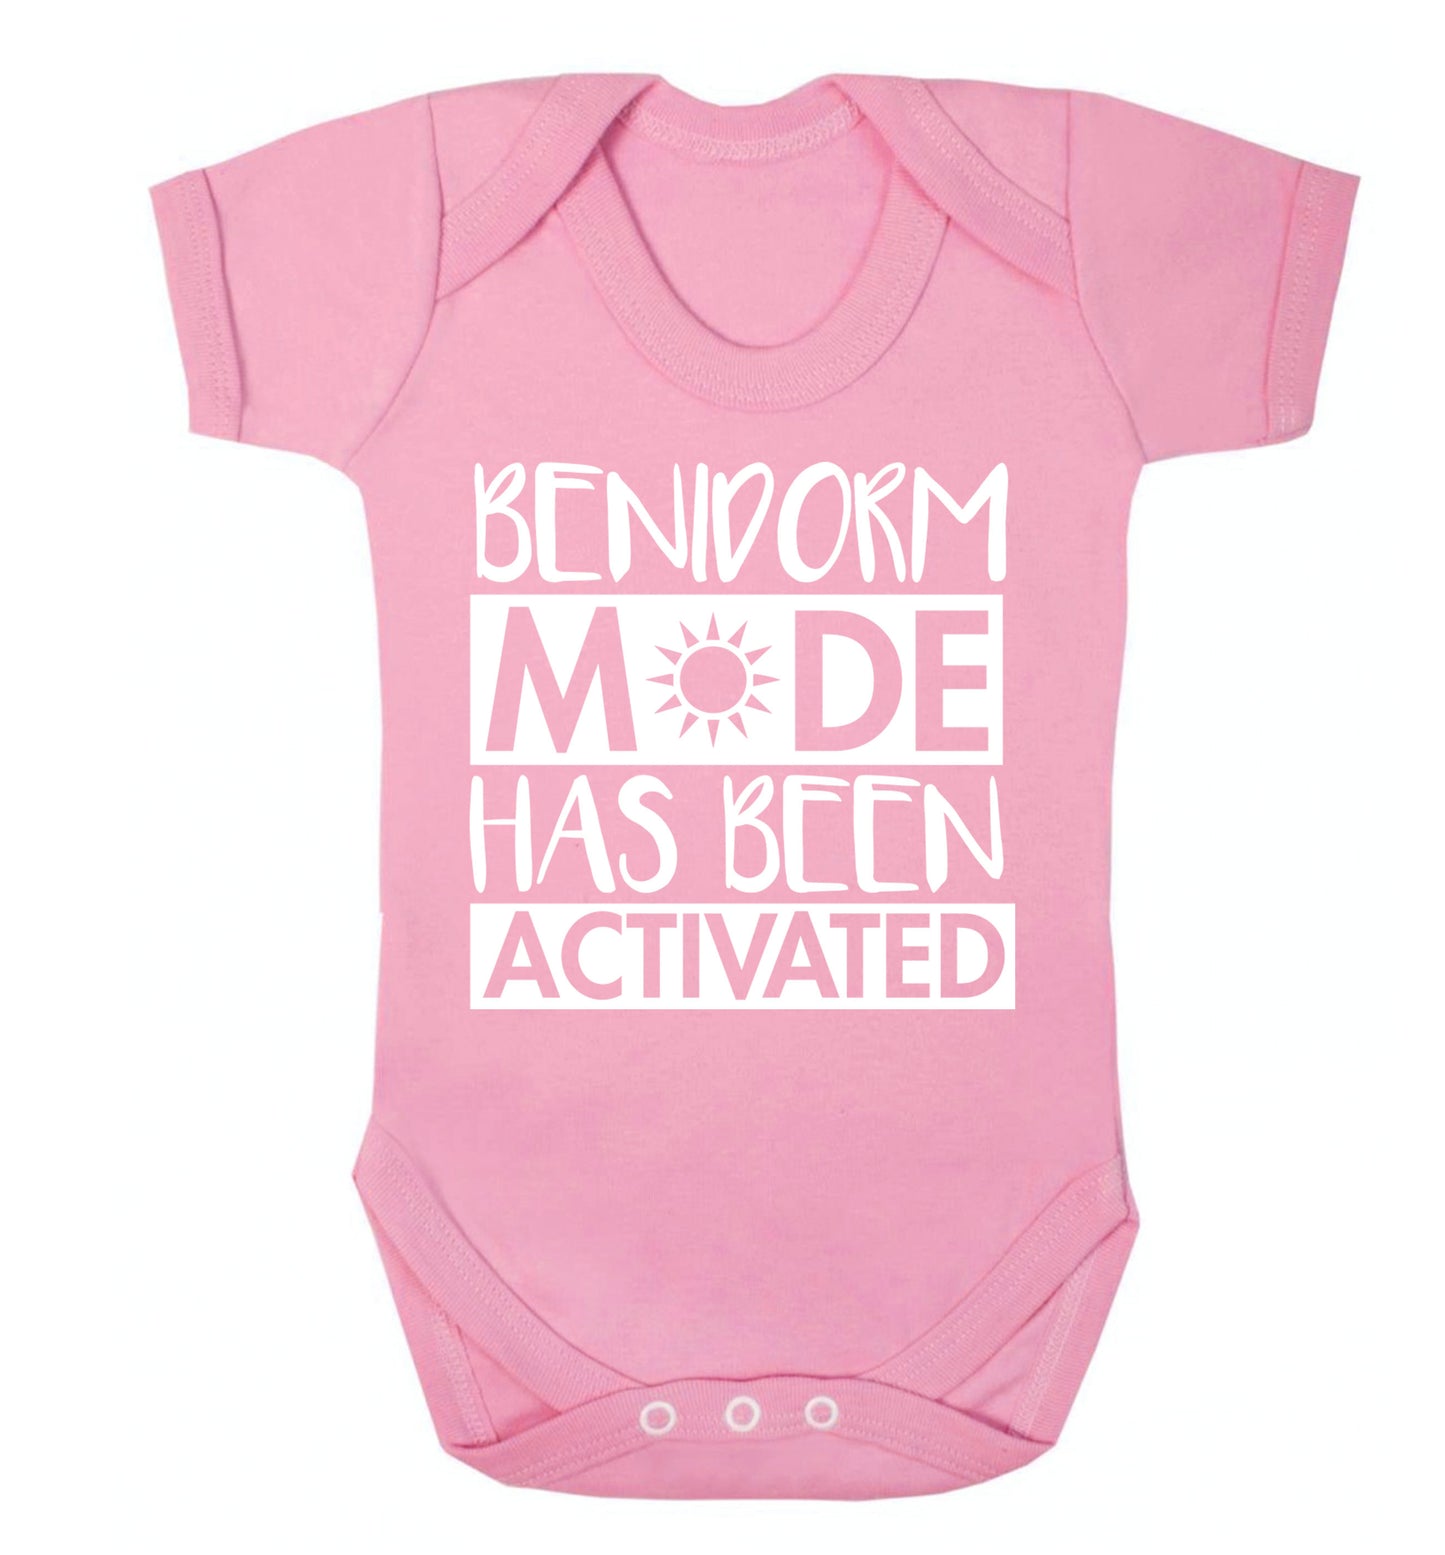 Benidorm mode has been activated Baby Vest pale pink 18-24 months